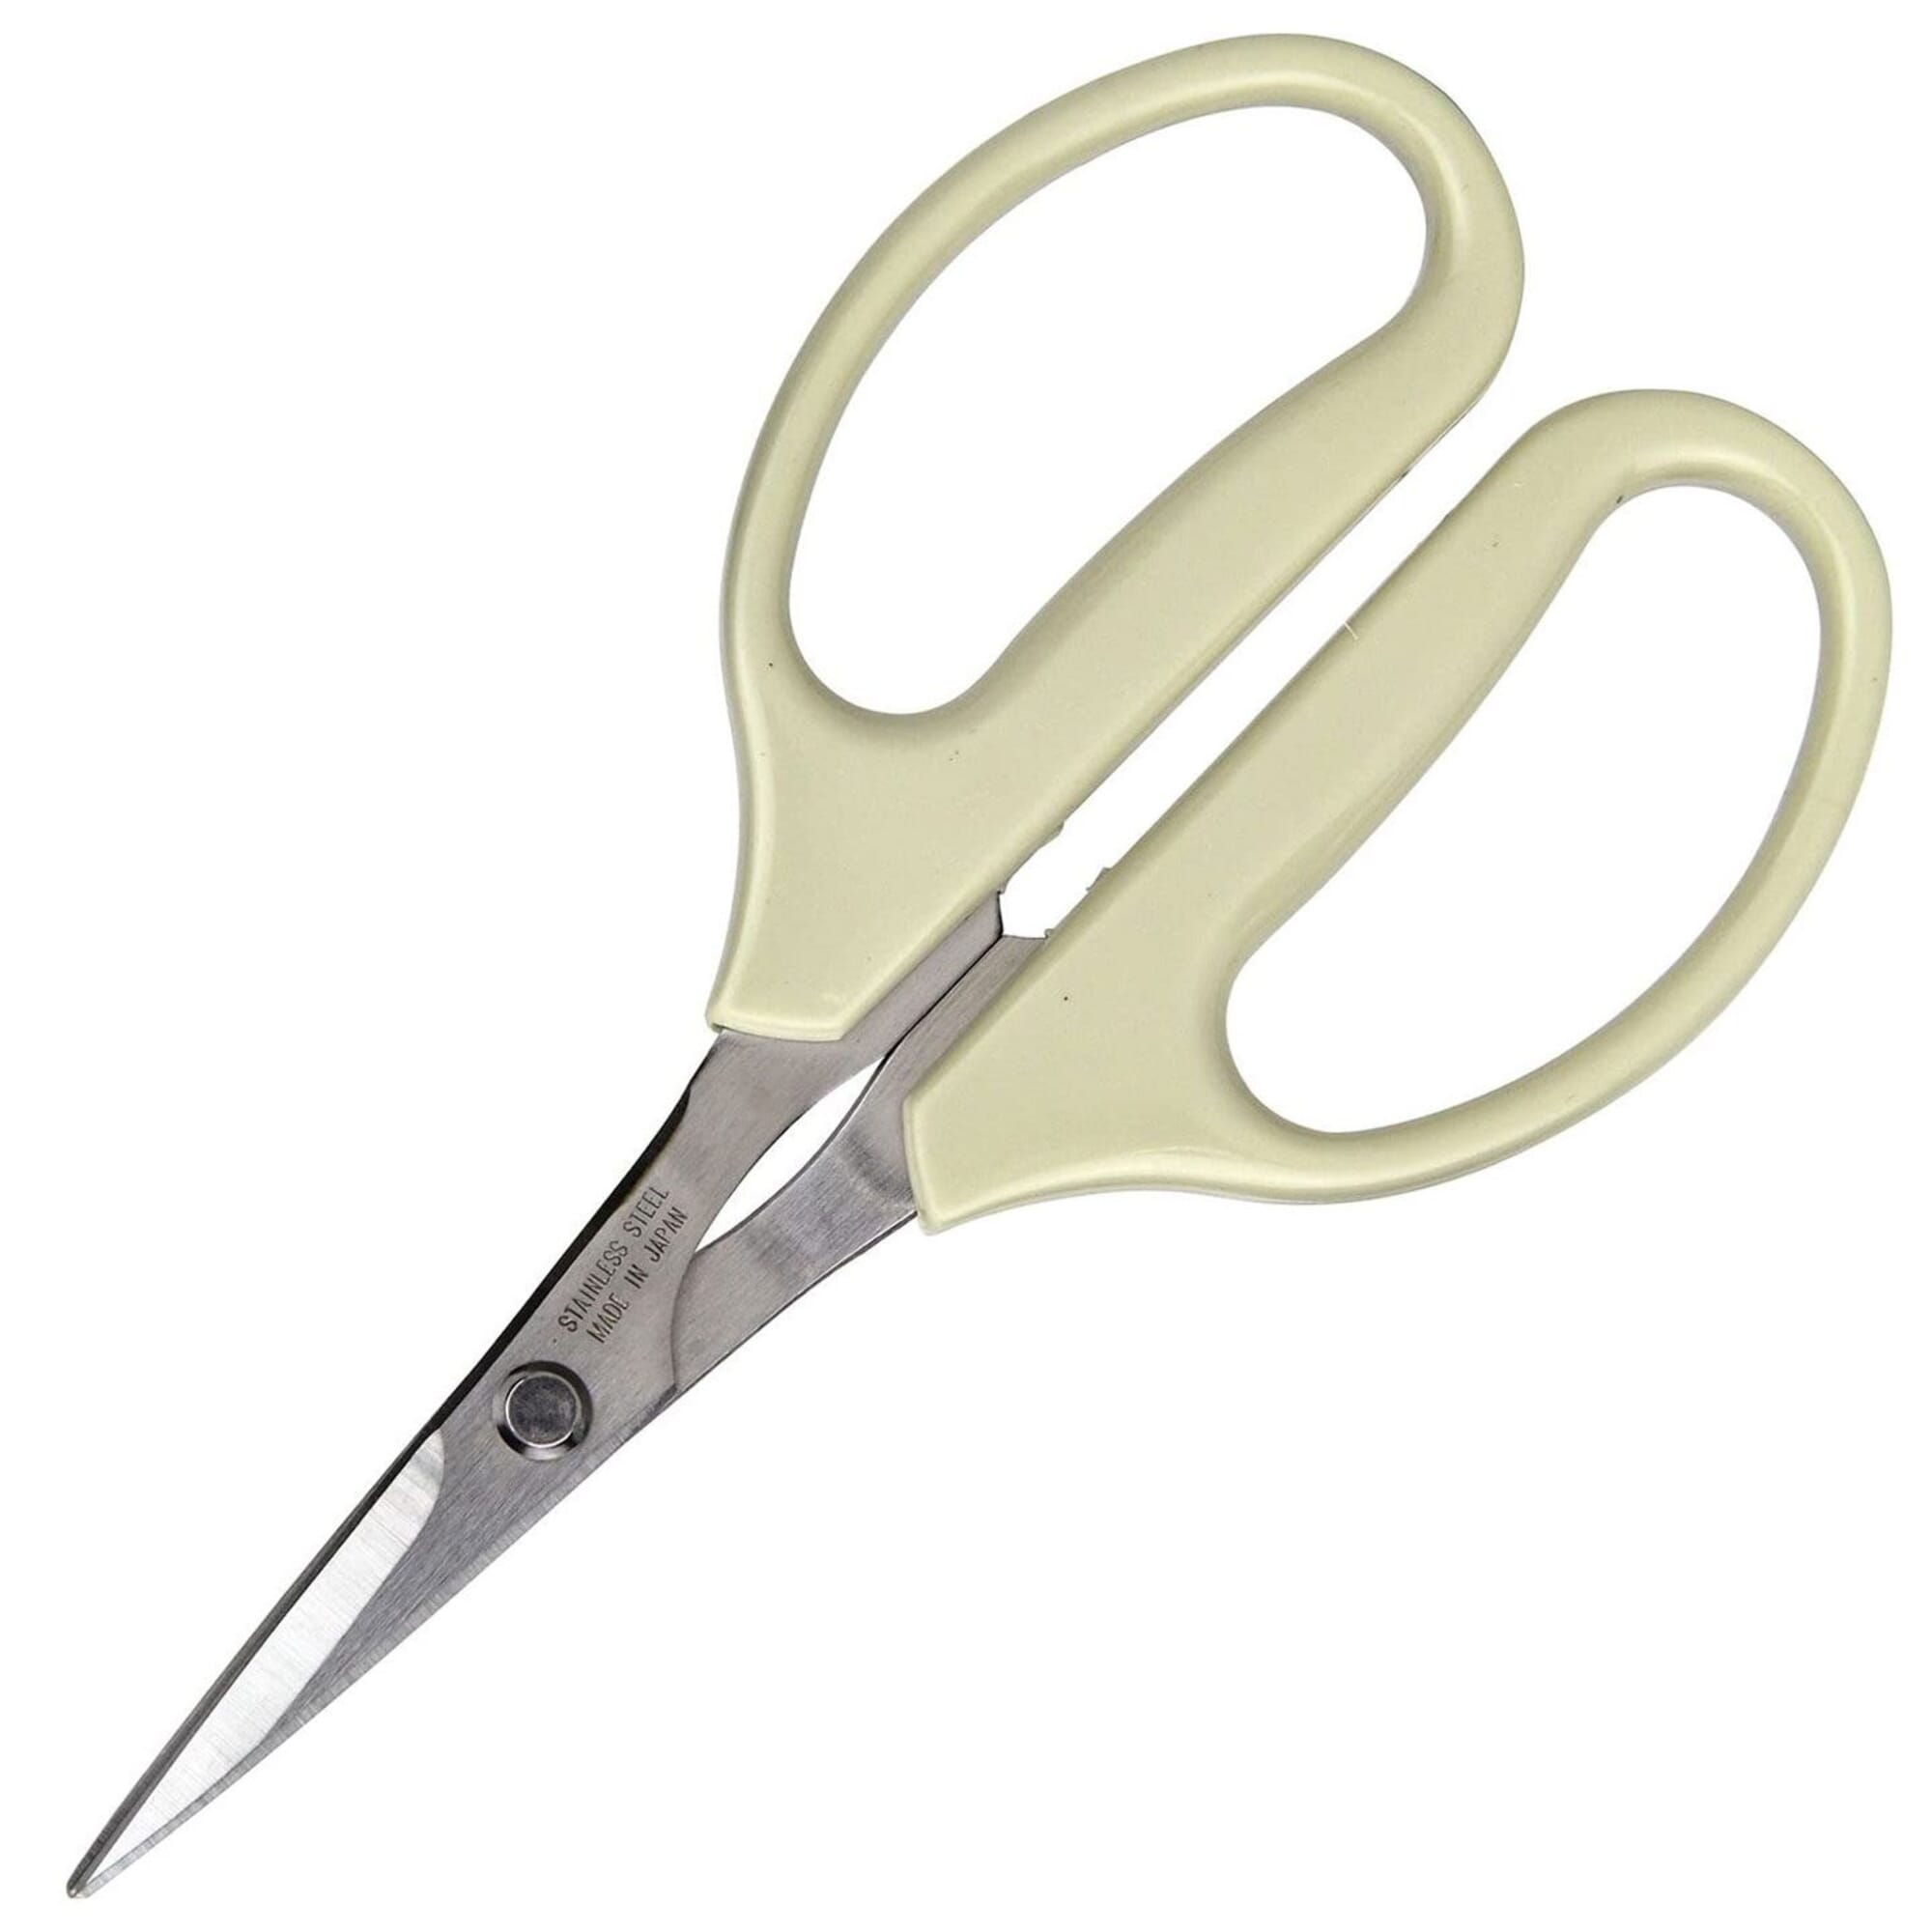 https://goodsjapan.sirv.com/item/images/42937/full/Craft-scissors-Leather-craft-tool-scissors-----1-.jpg?scale.width=2000&scale.height=2000